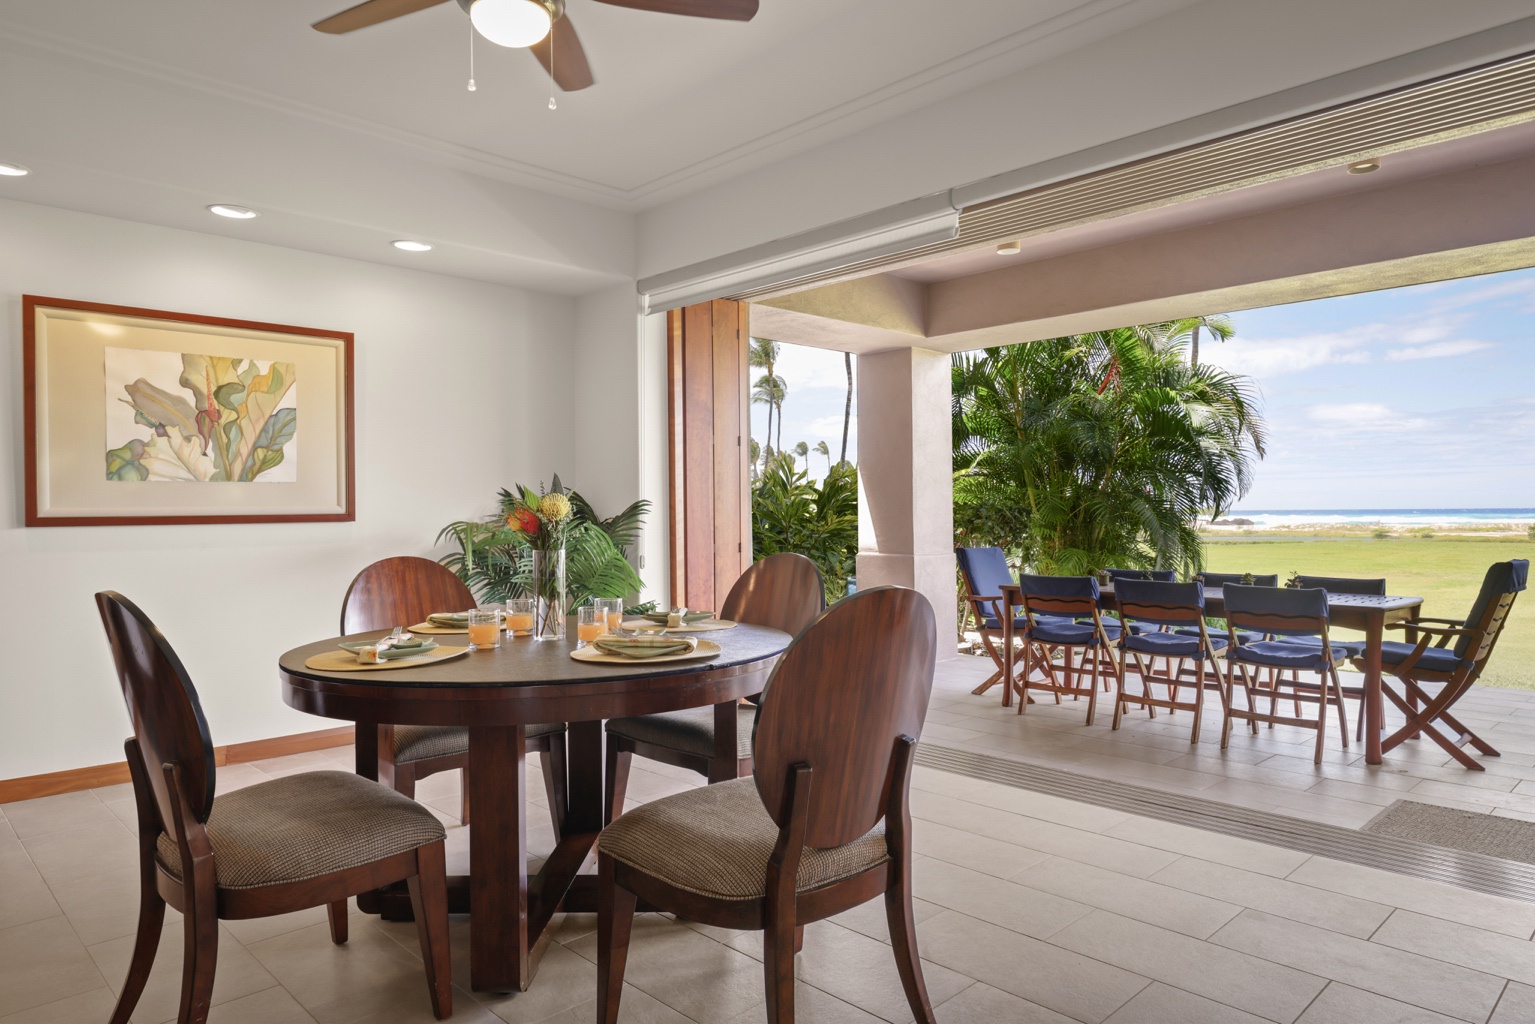 Kailua Kona Vacation Rentals, 3BD Golf Villa (3101) at Four Seasons Resort at Hualalai - Alternate view of the breakfast nook and al fresco dining table.